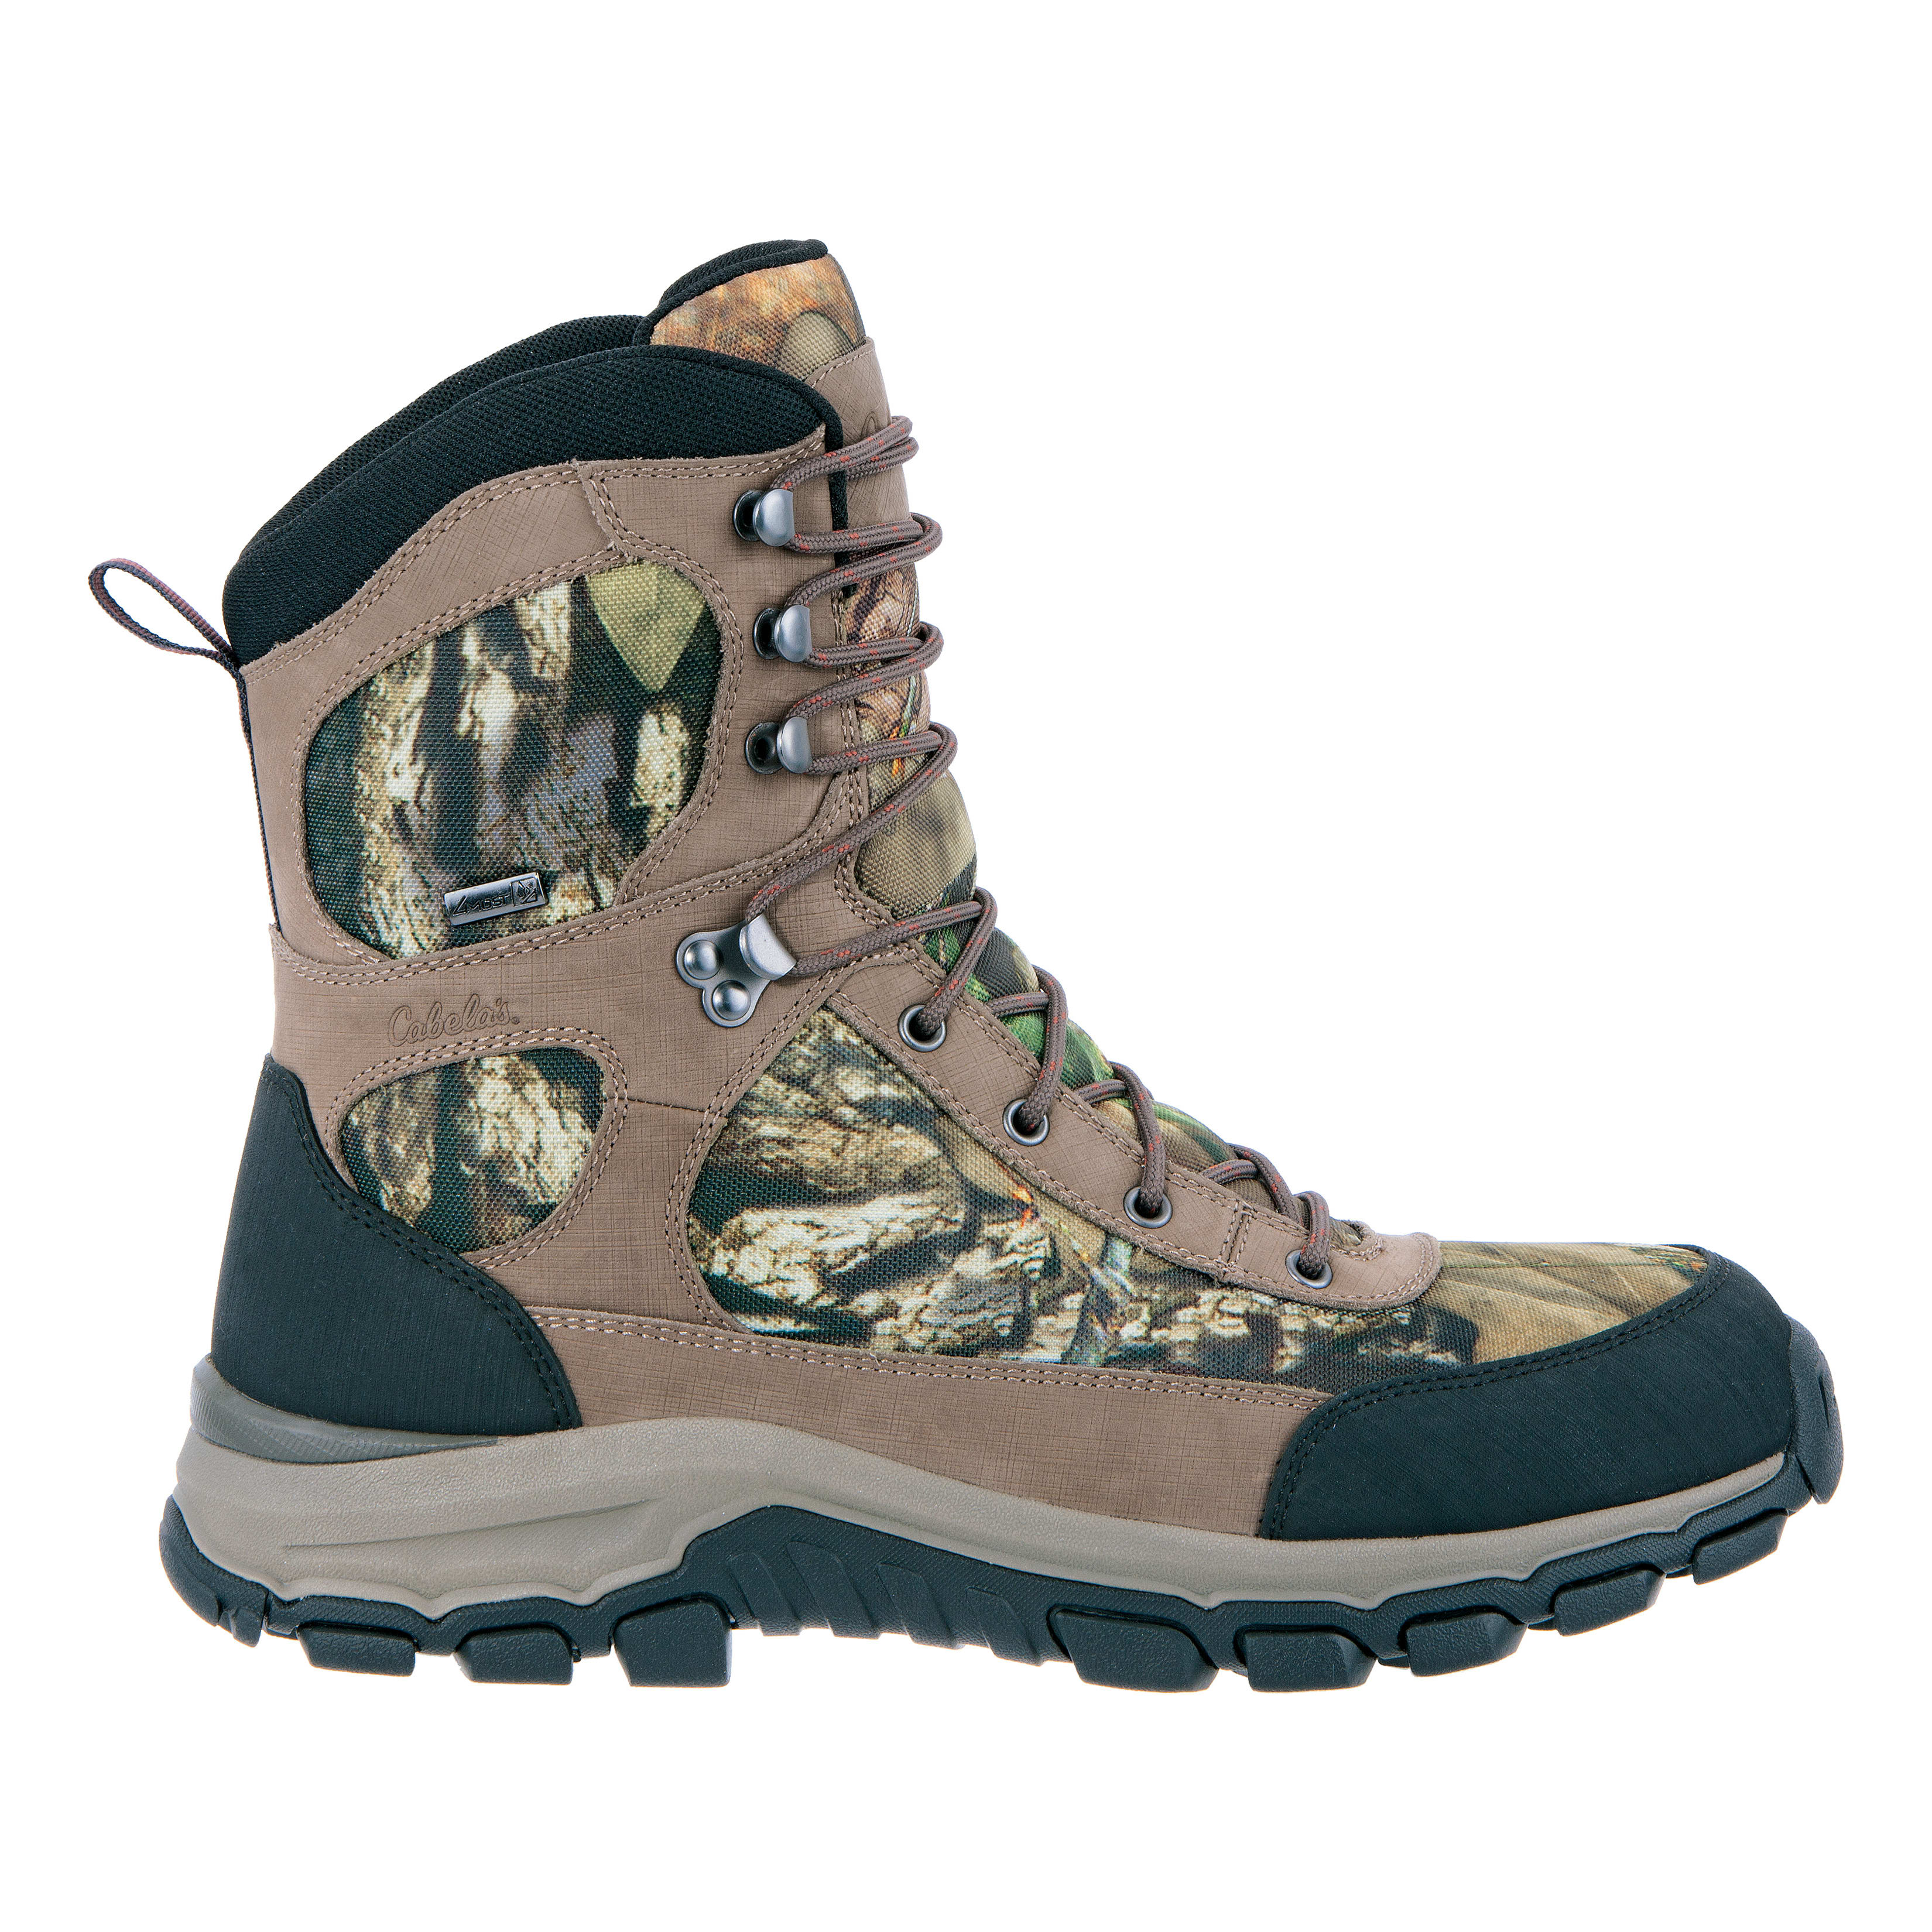 Cabela's 8" 400-Gram Rush Creek™ Hunting Boots - side